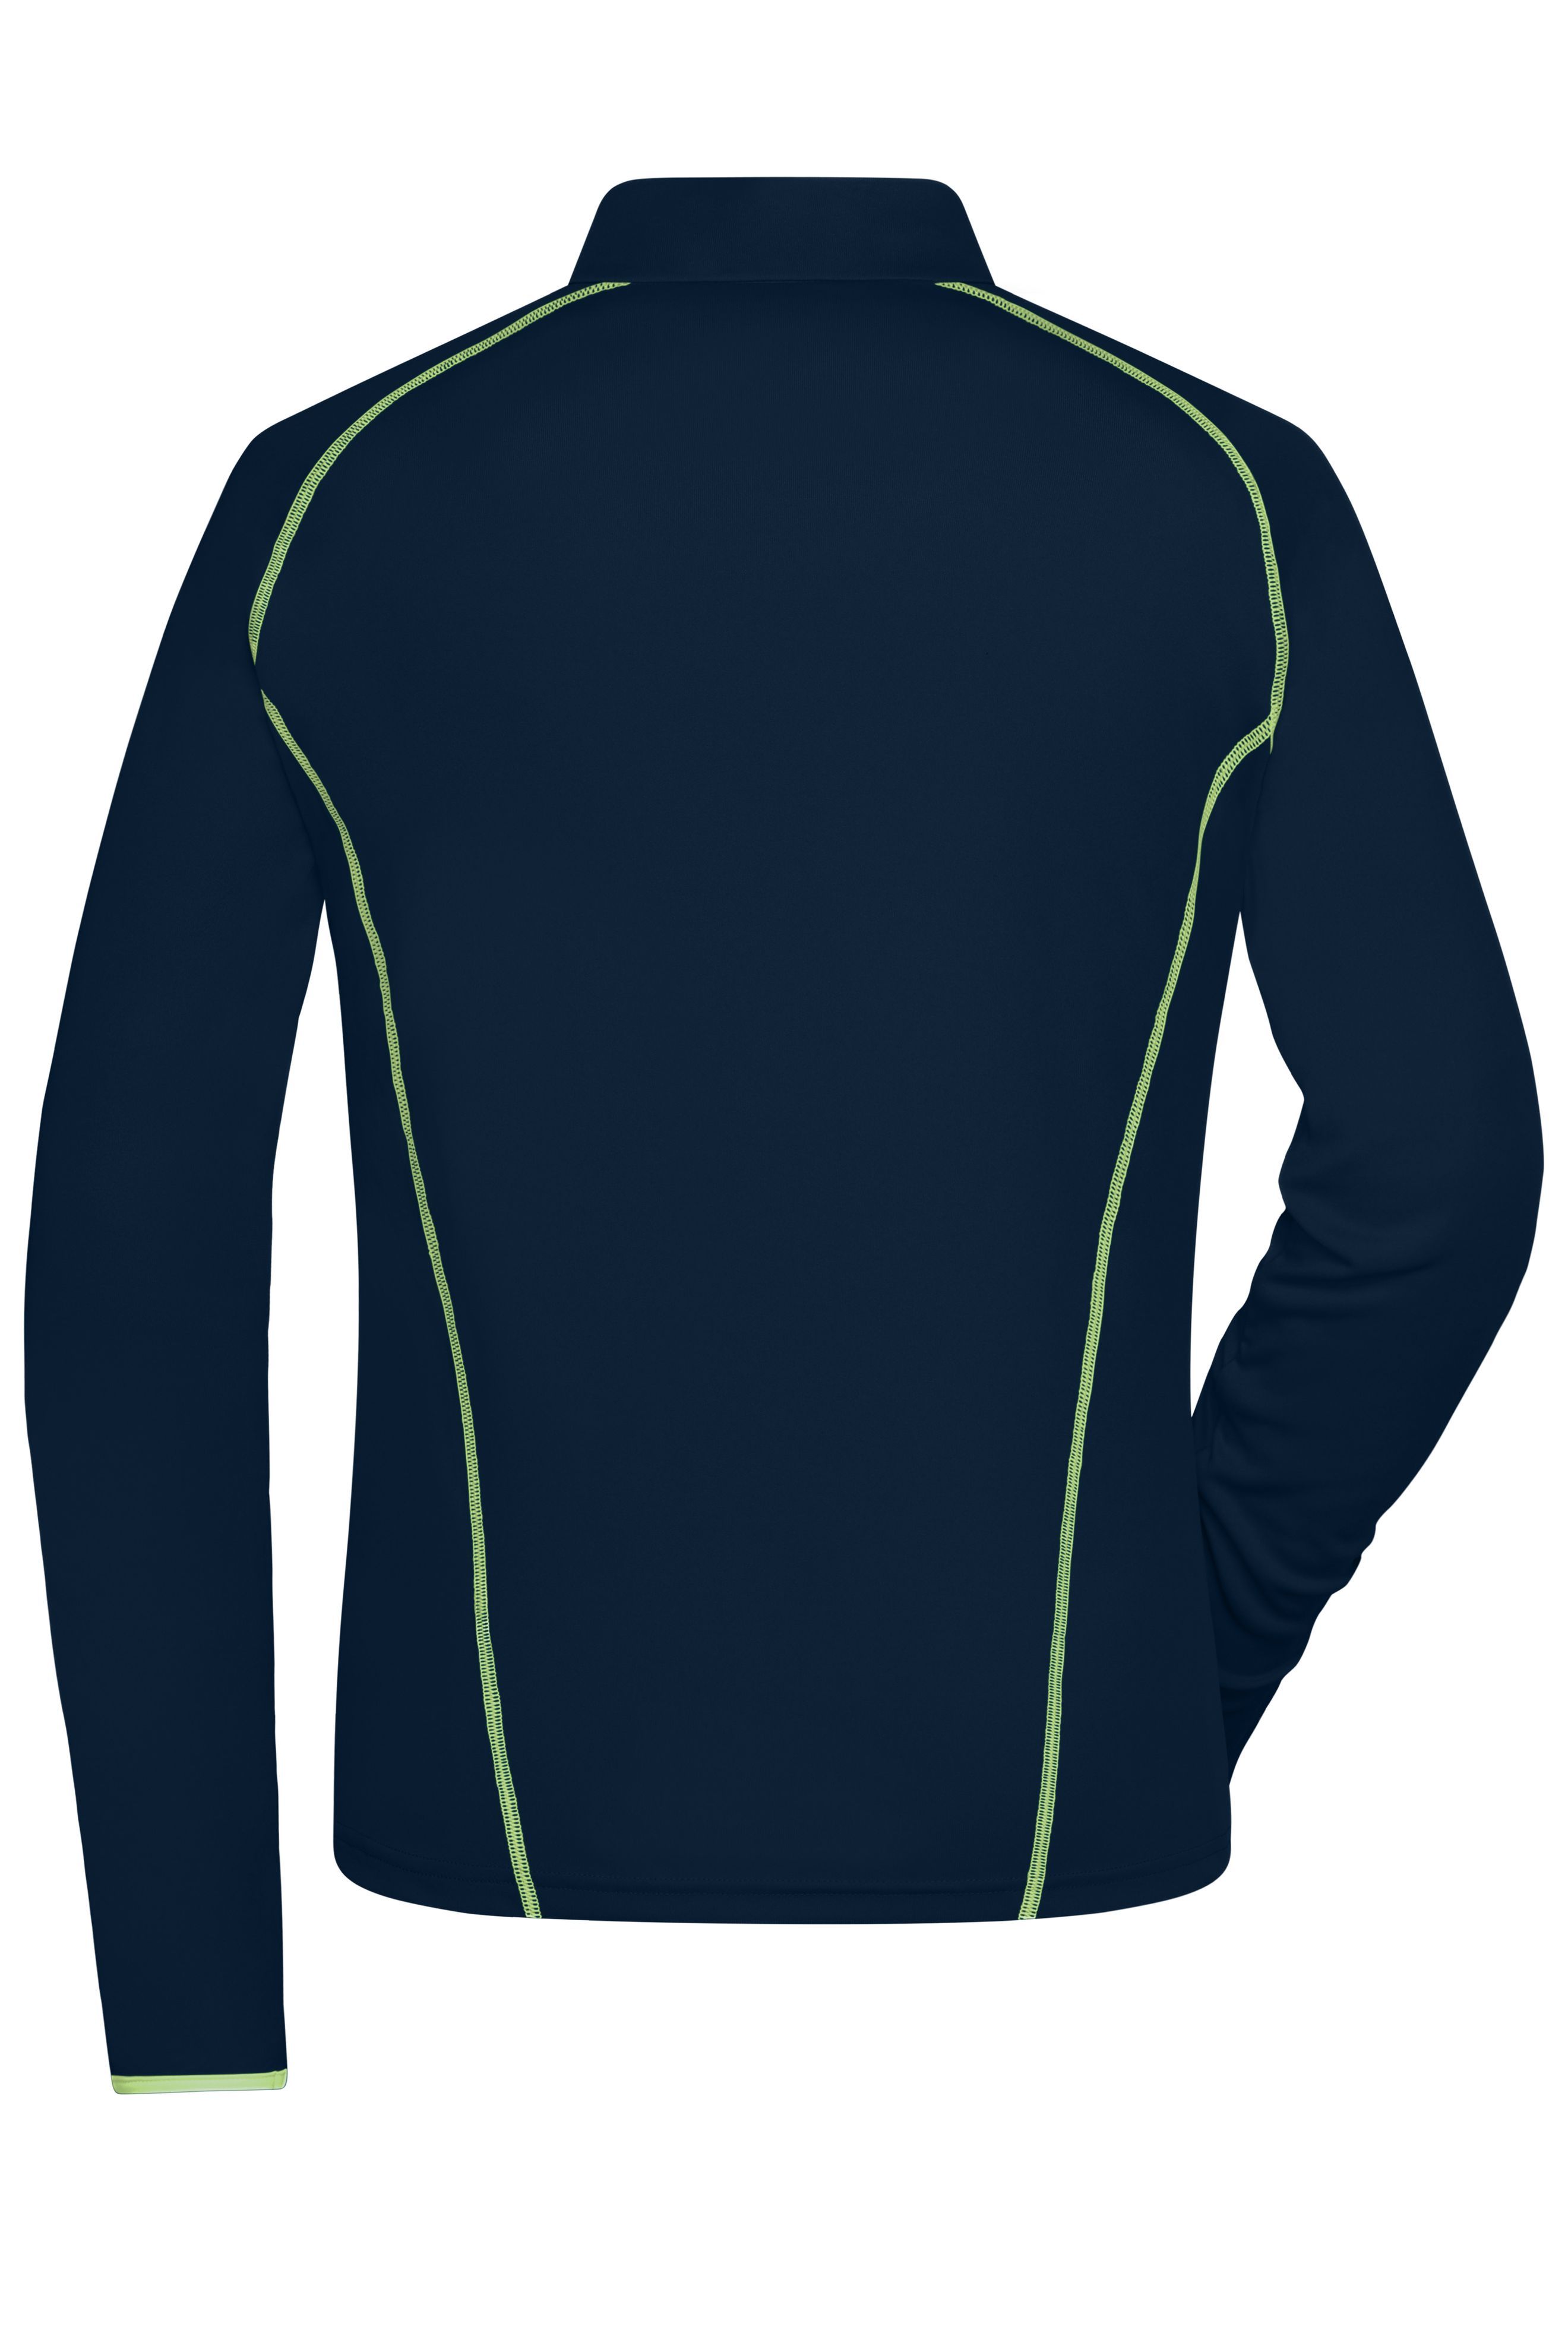 Ladies' Sports Shirt Longsleeve JN497 Langarm Funktionsshirt für Fitness und Sport